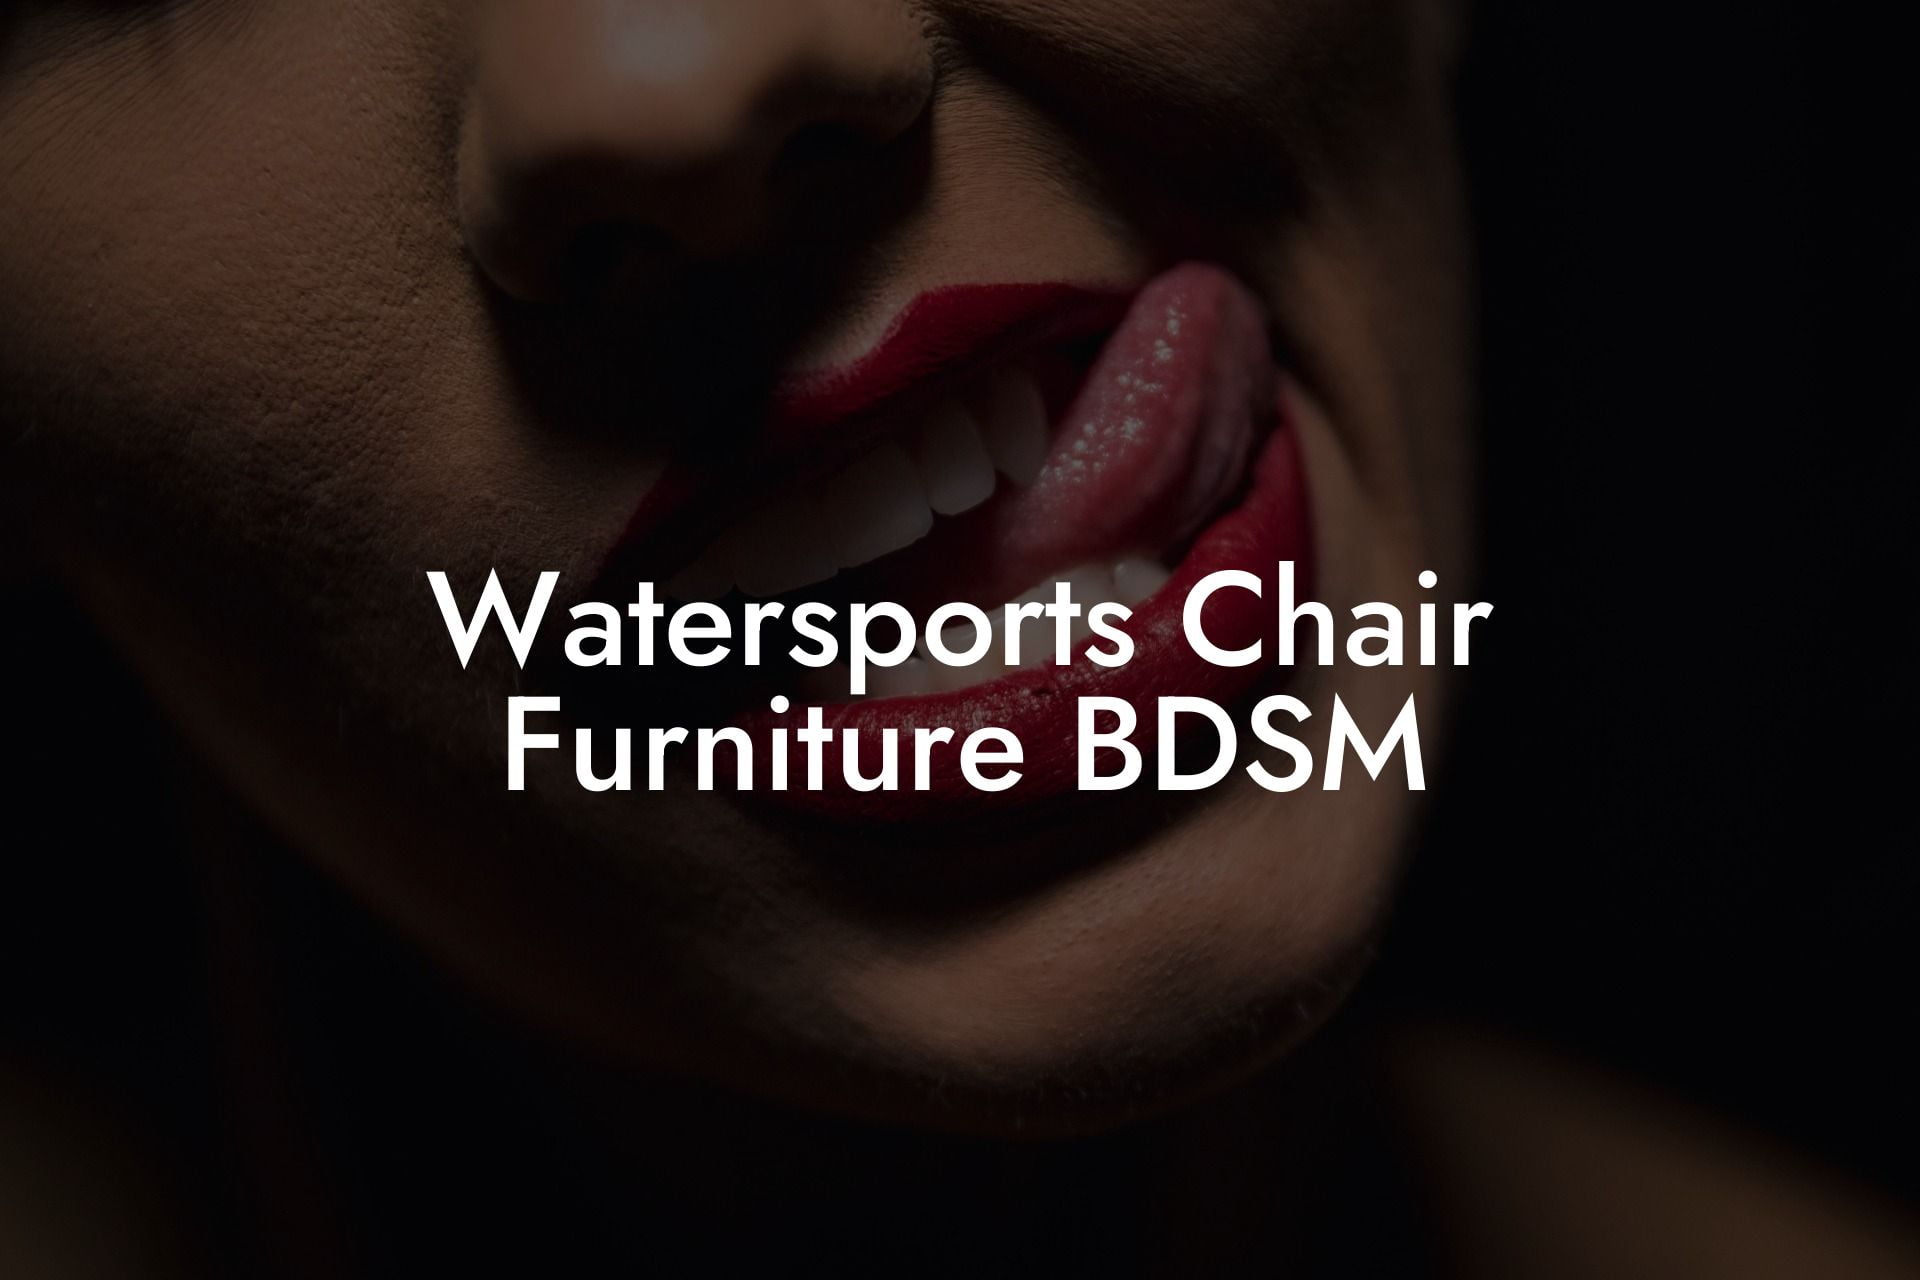 Watersports Chair Furniture BDSM